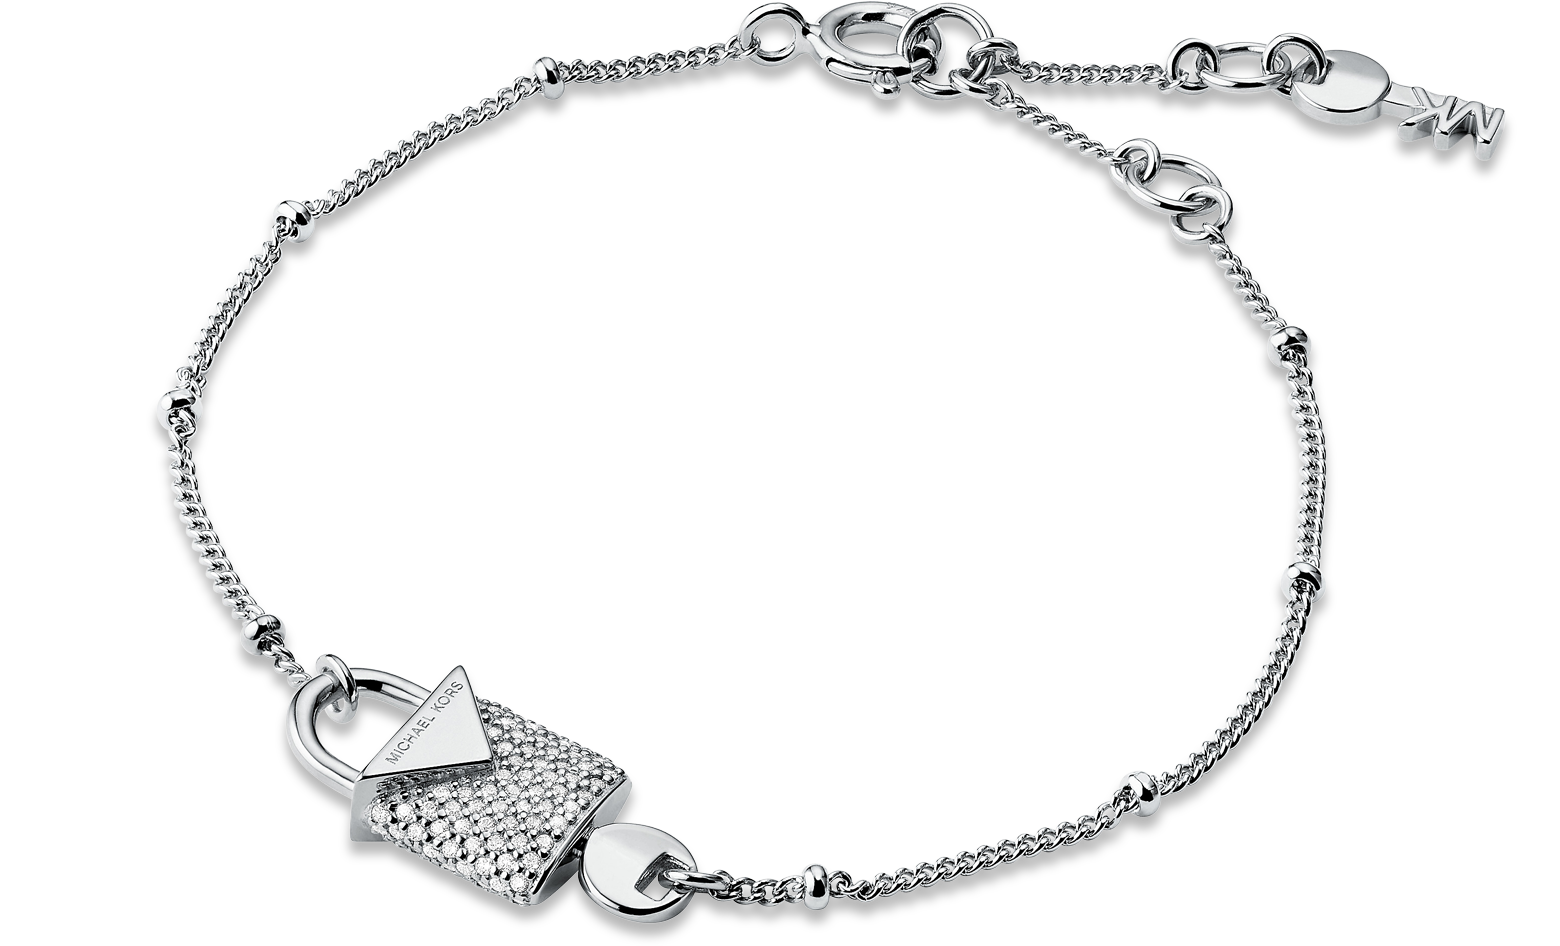 michael kors silver bracelet with padlock